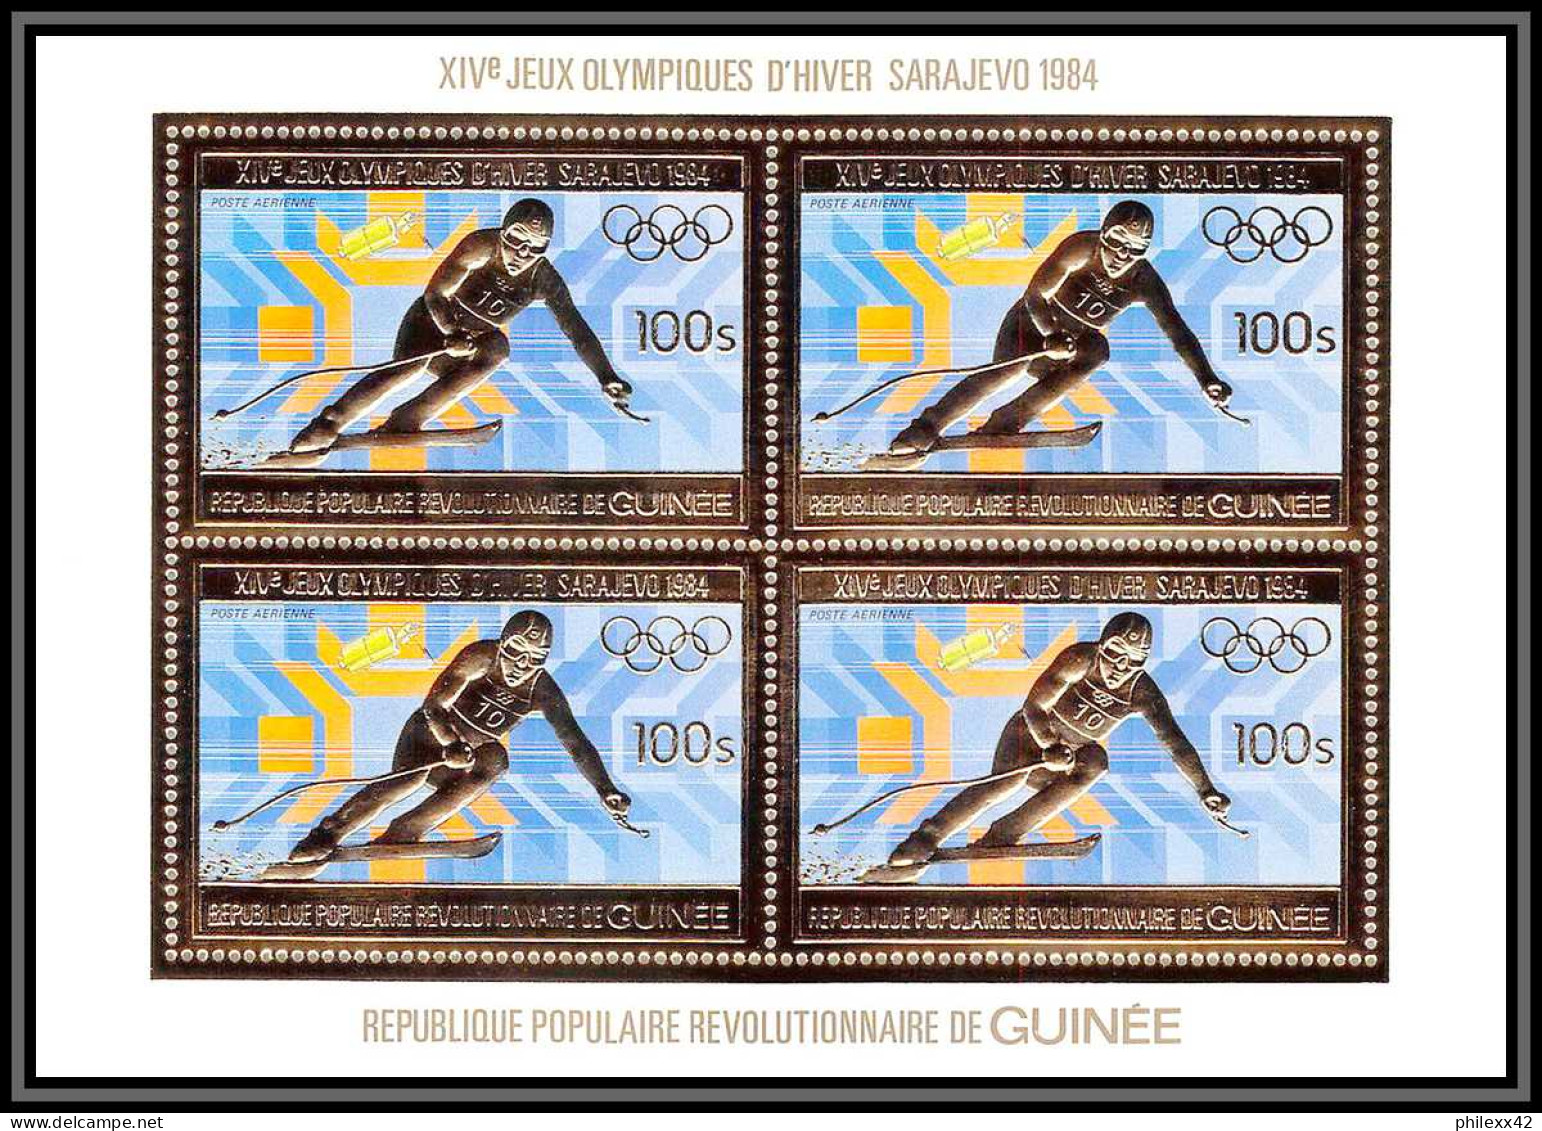 85830/ N°971 A Sarajevo SKI 1984 Jeux Olympiques Olympic Games Guinée Guinea OR Gold Stamps ** MNH Bloc 4 - Inverno1984: Sarajevo